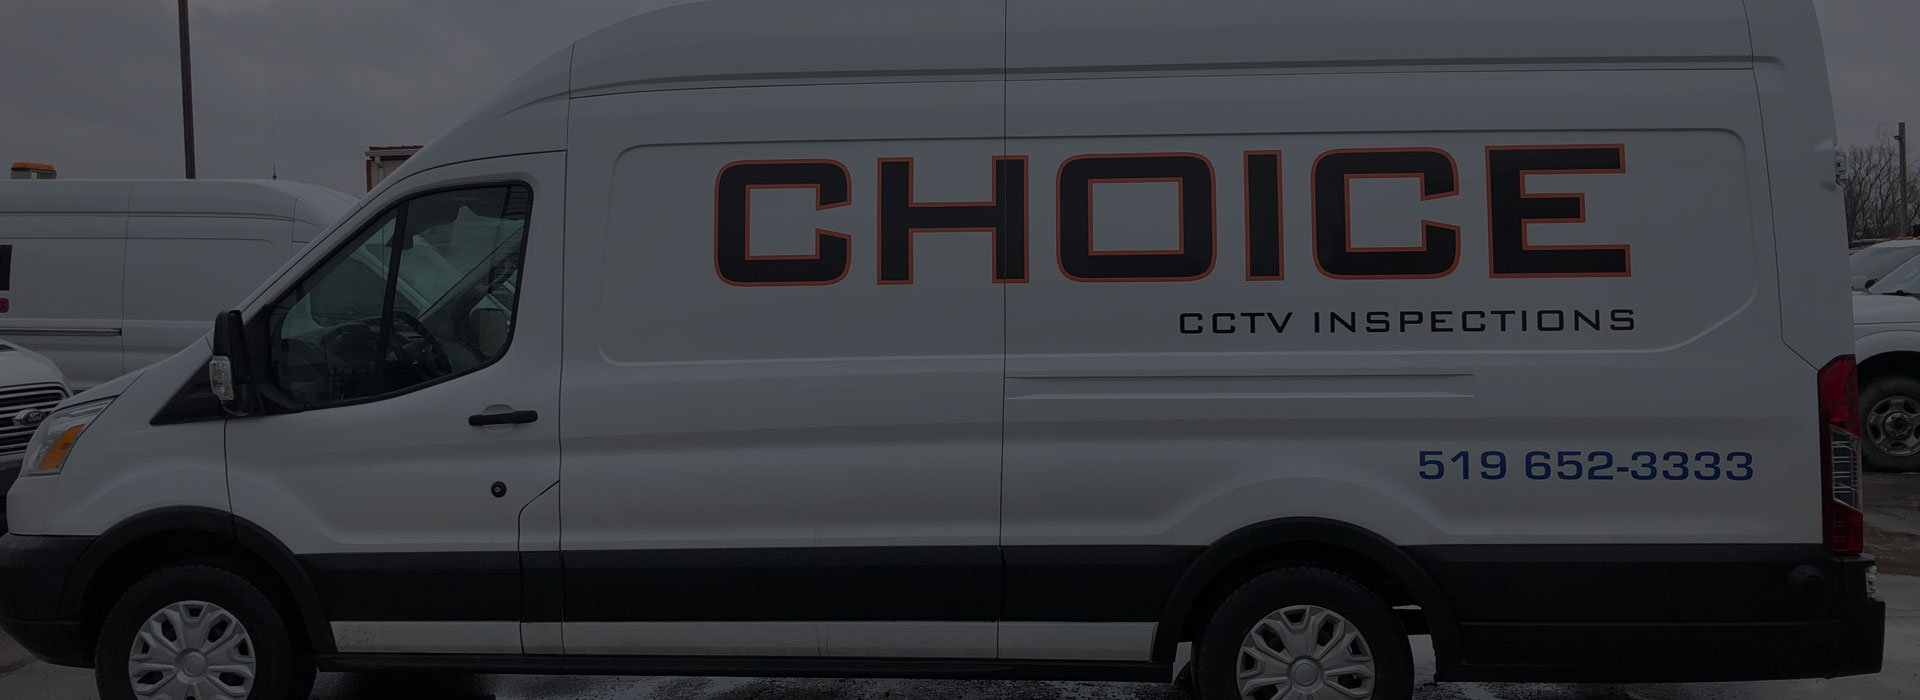 choice-cctv-van-exterior